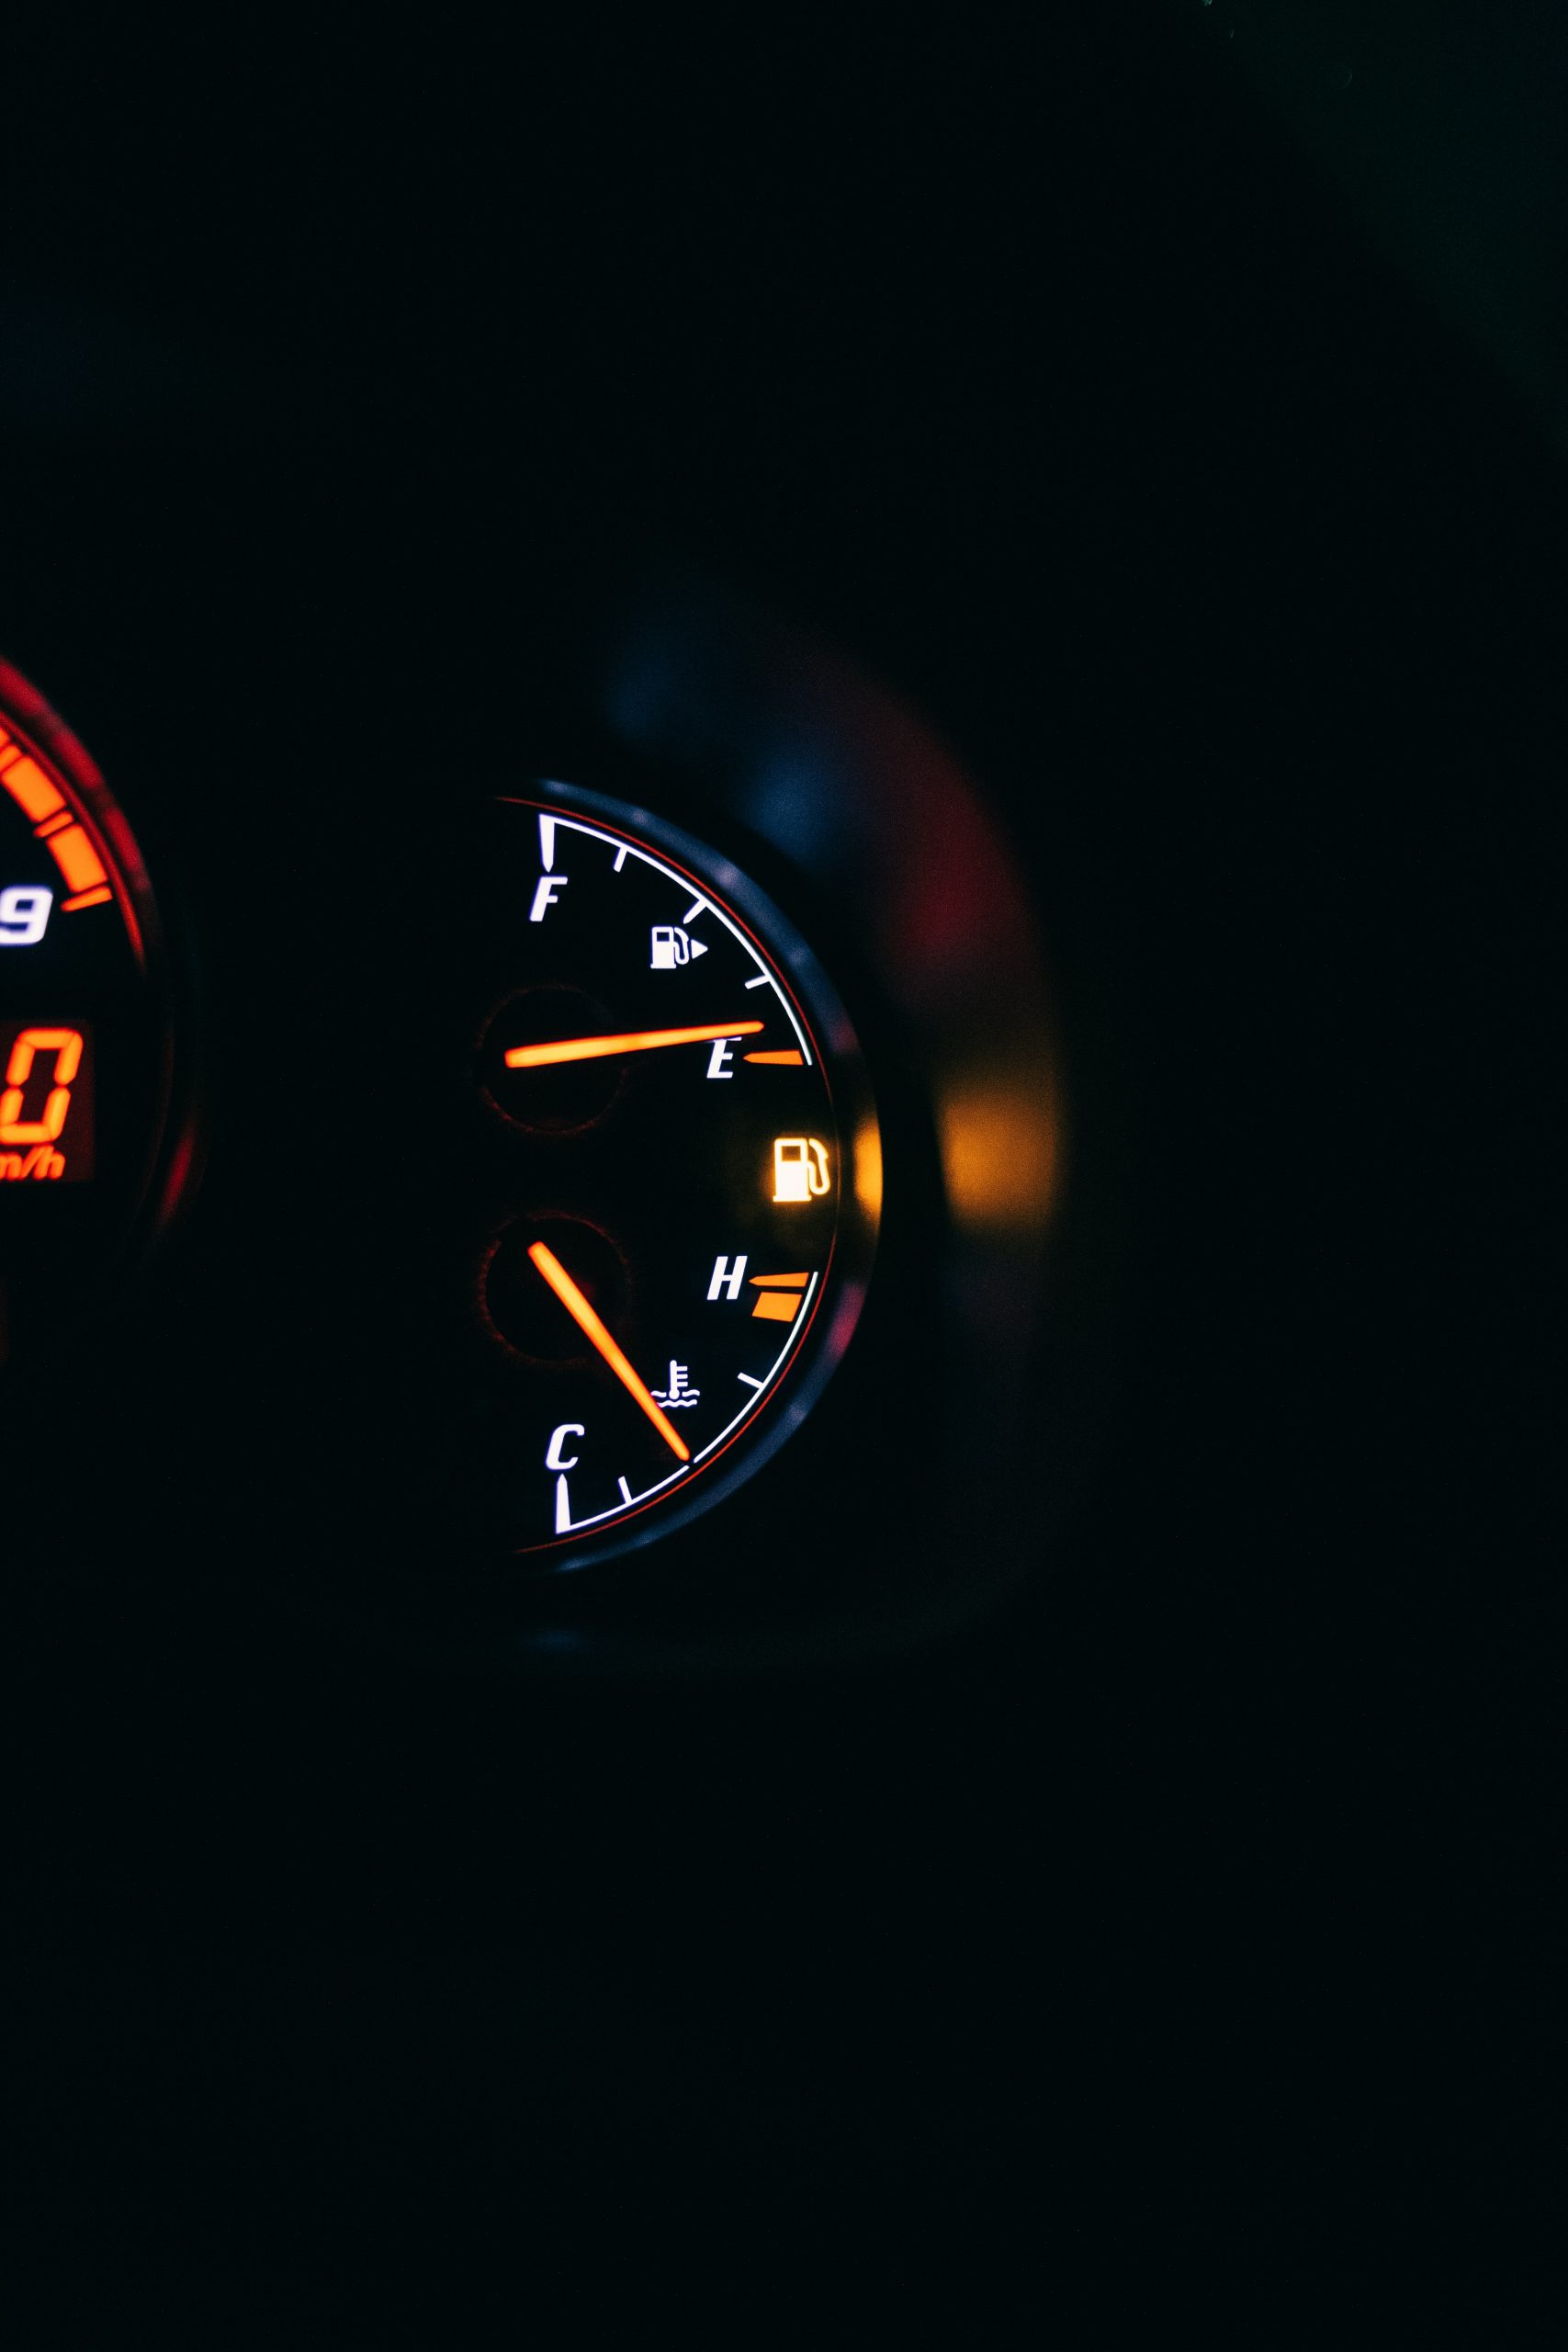 A car's fuel gauge